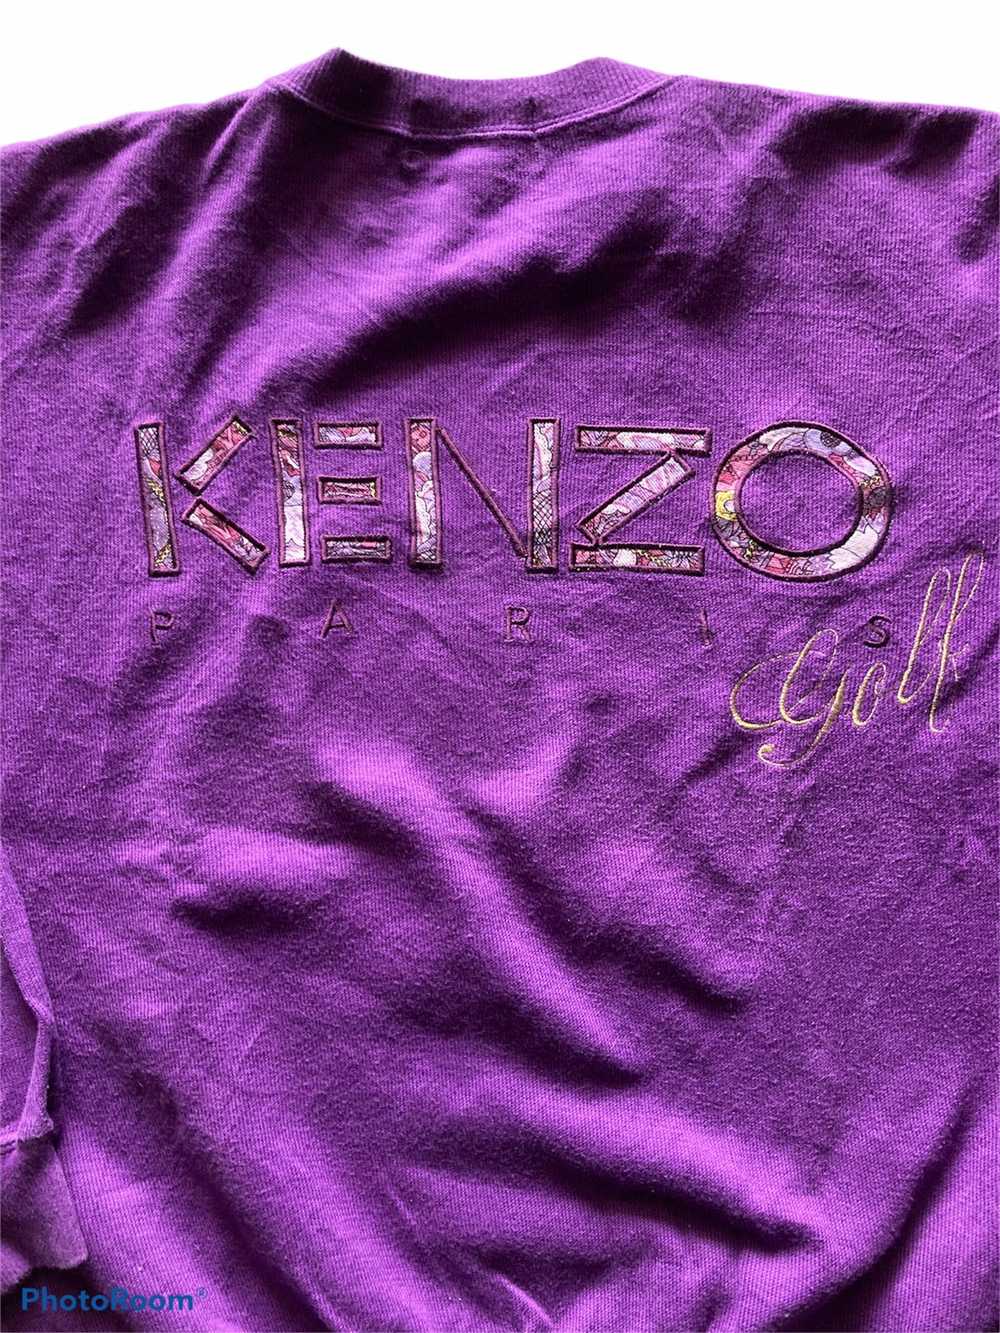 Kenzo kenzo golf paris - image 2